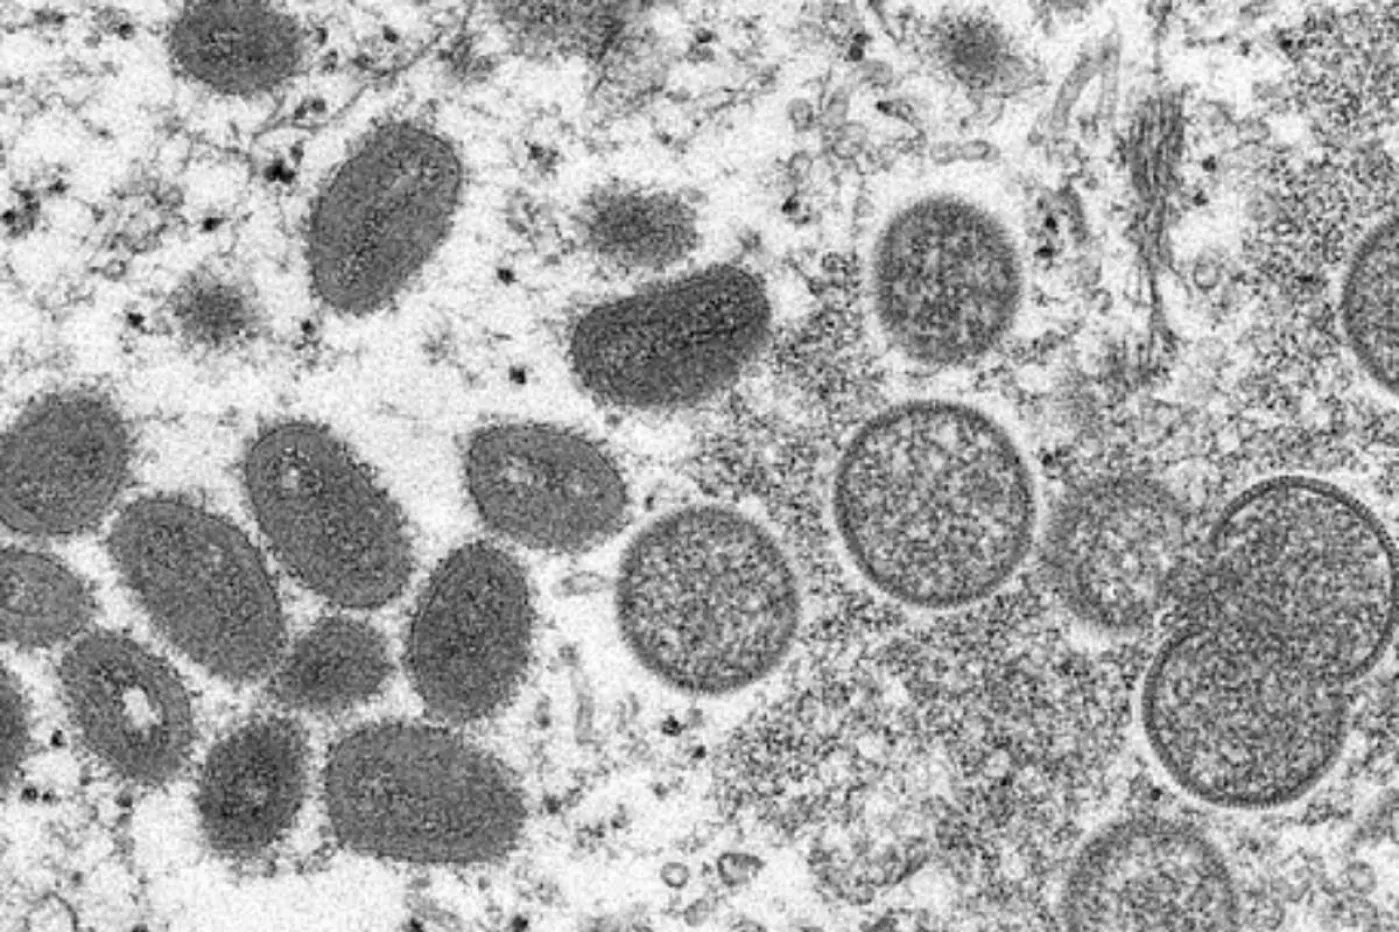 Virus a través de un microscopio electrónico. Foto: CDC